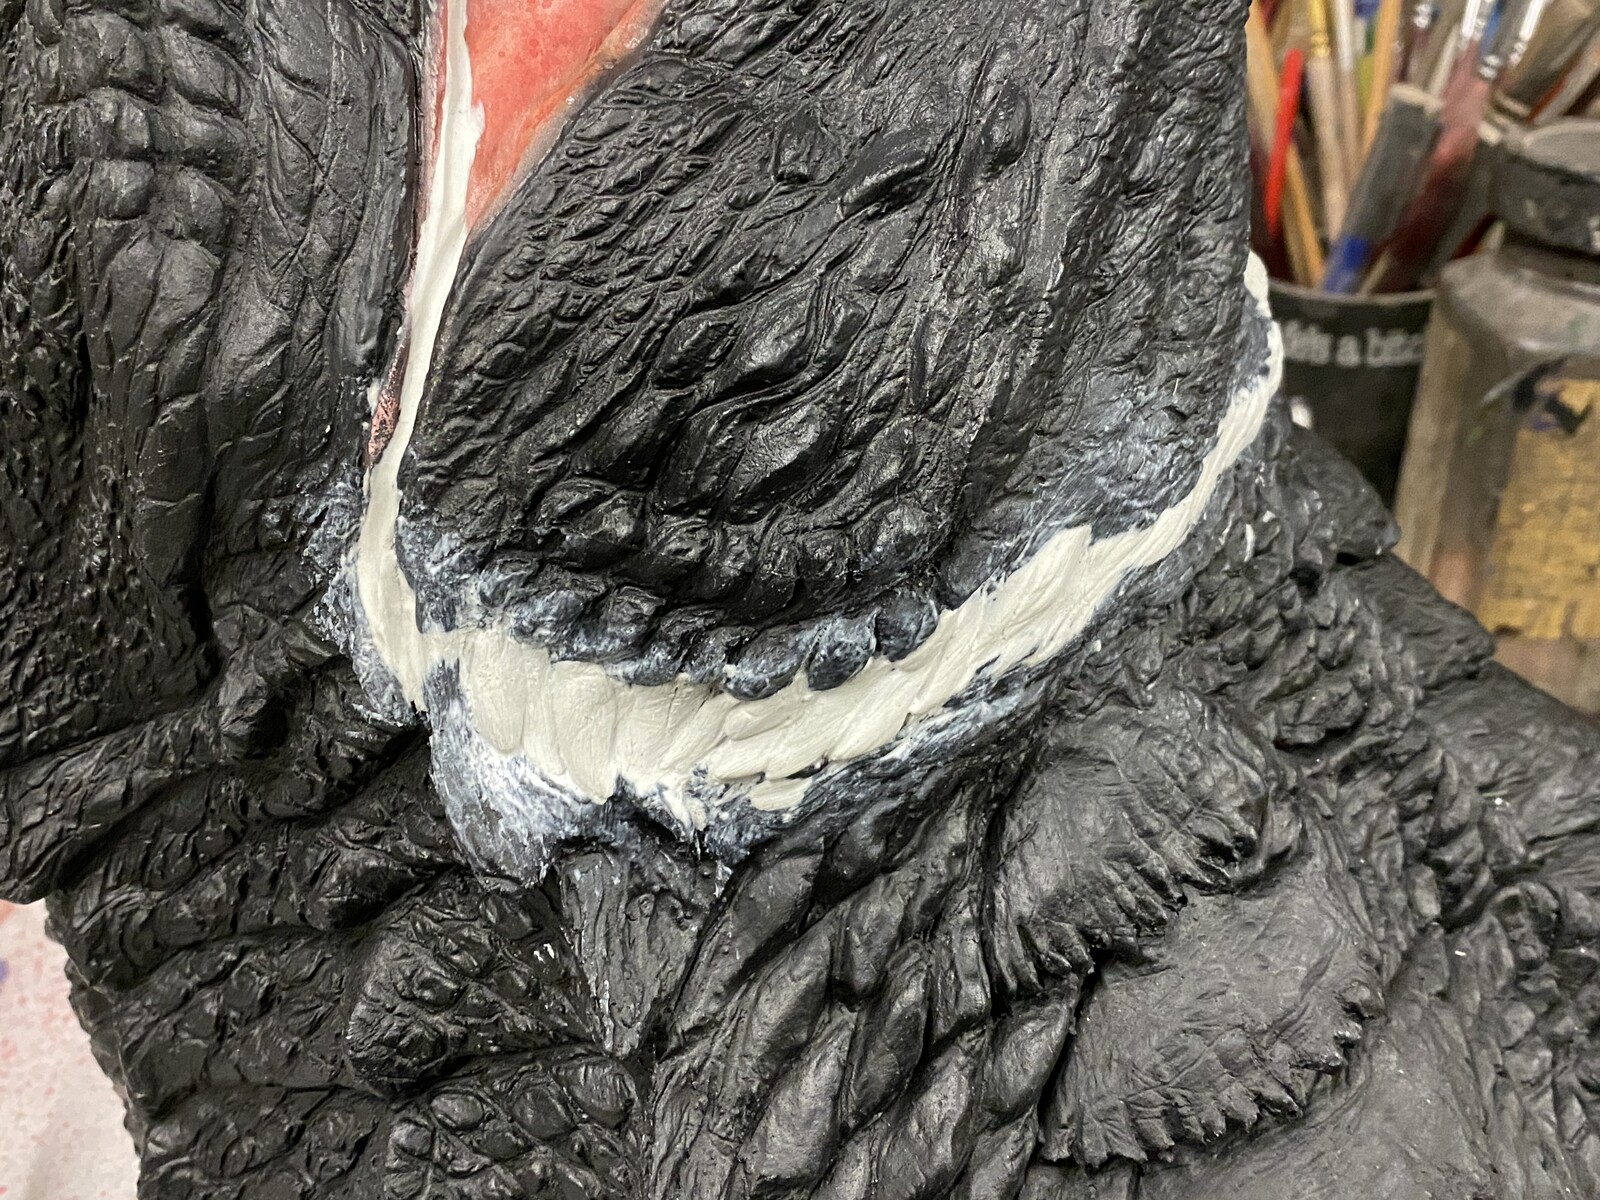 Godzilla 2014 Head Studio Scale W.I.P. 
https://www.solidart.club/